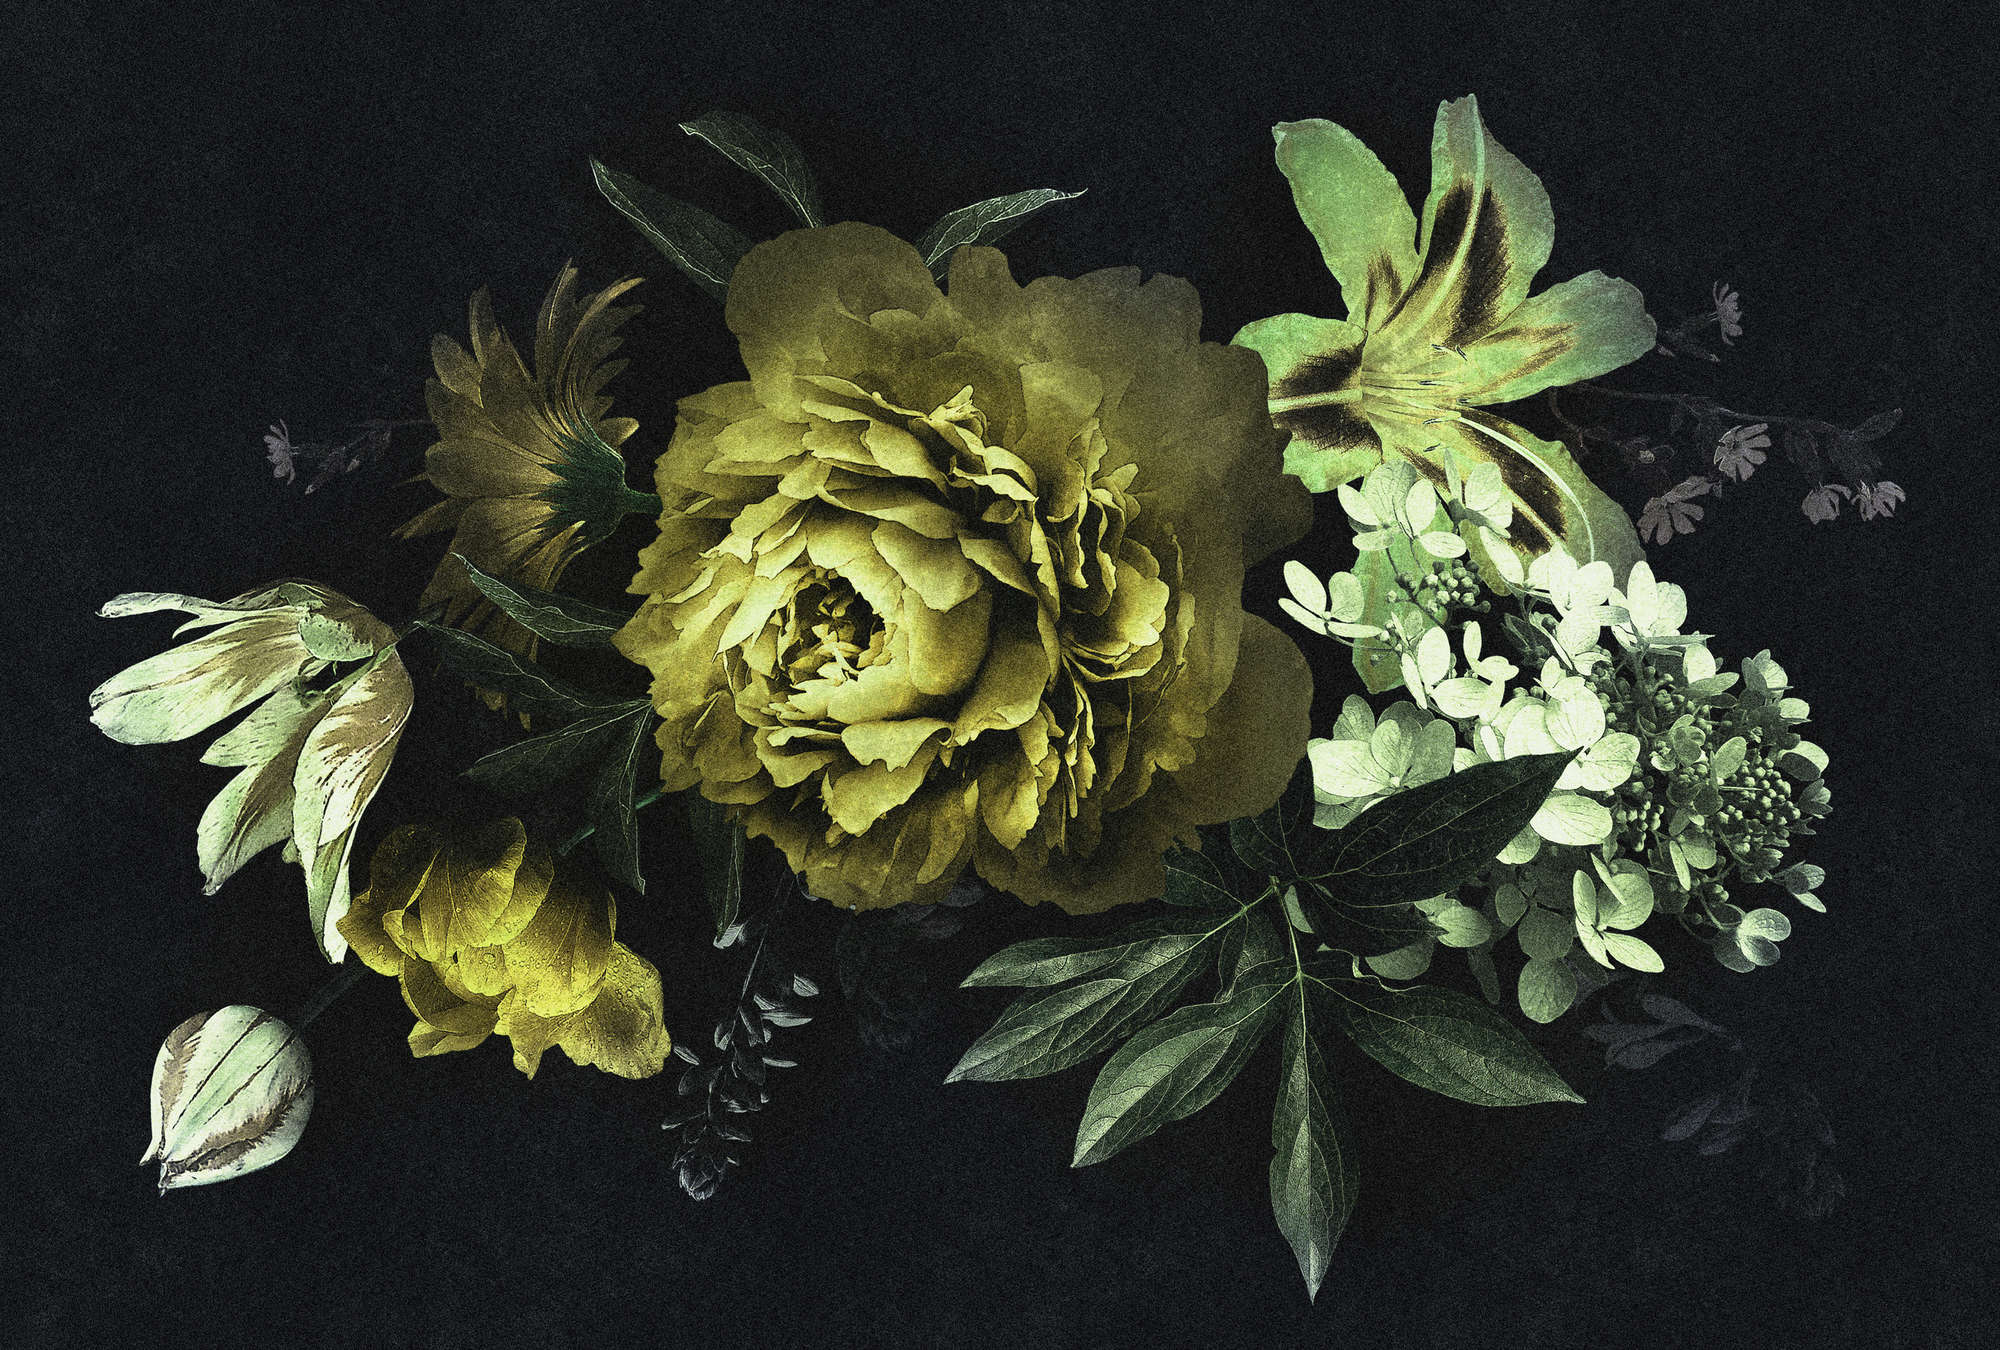             Drama queen 2 - Carta da parati con bouquet di fiori in cartoncino verde - giallo, nero | tessuto liscio opaco
        